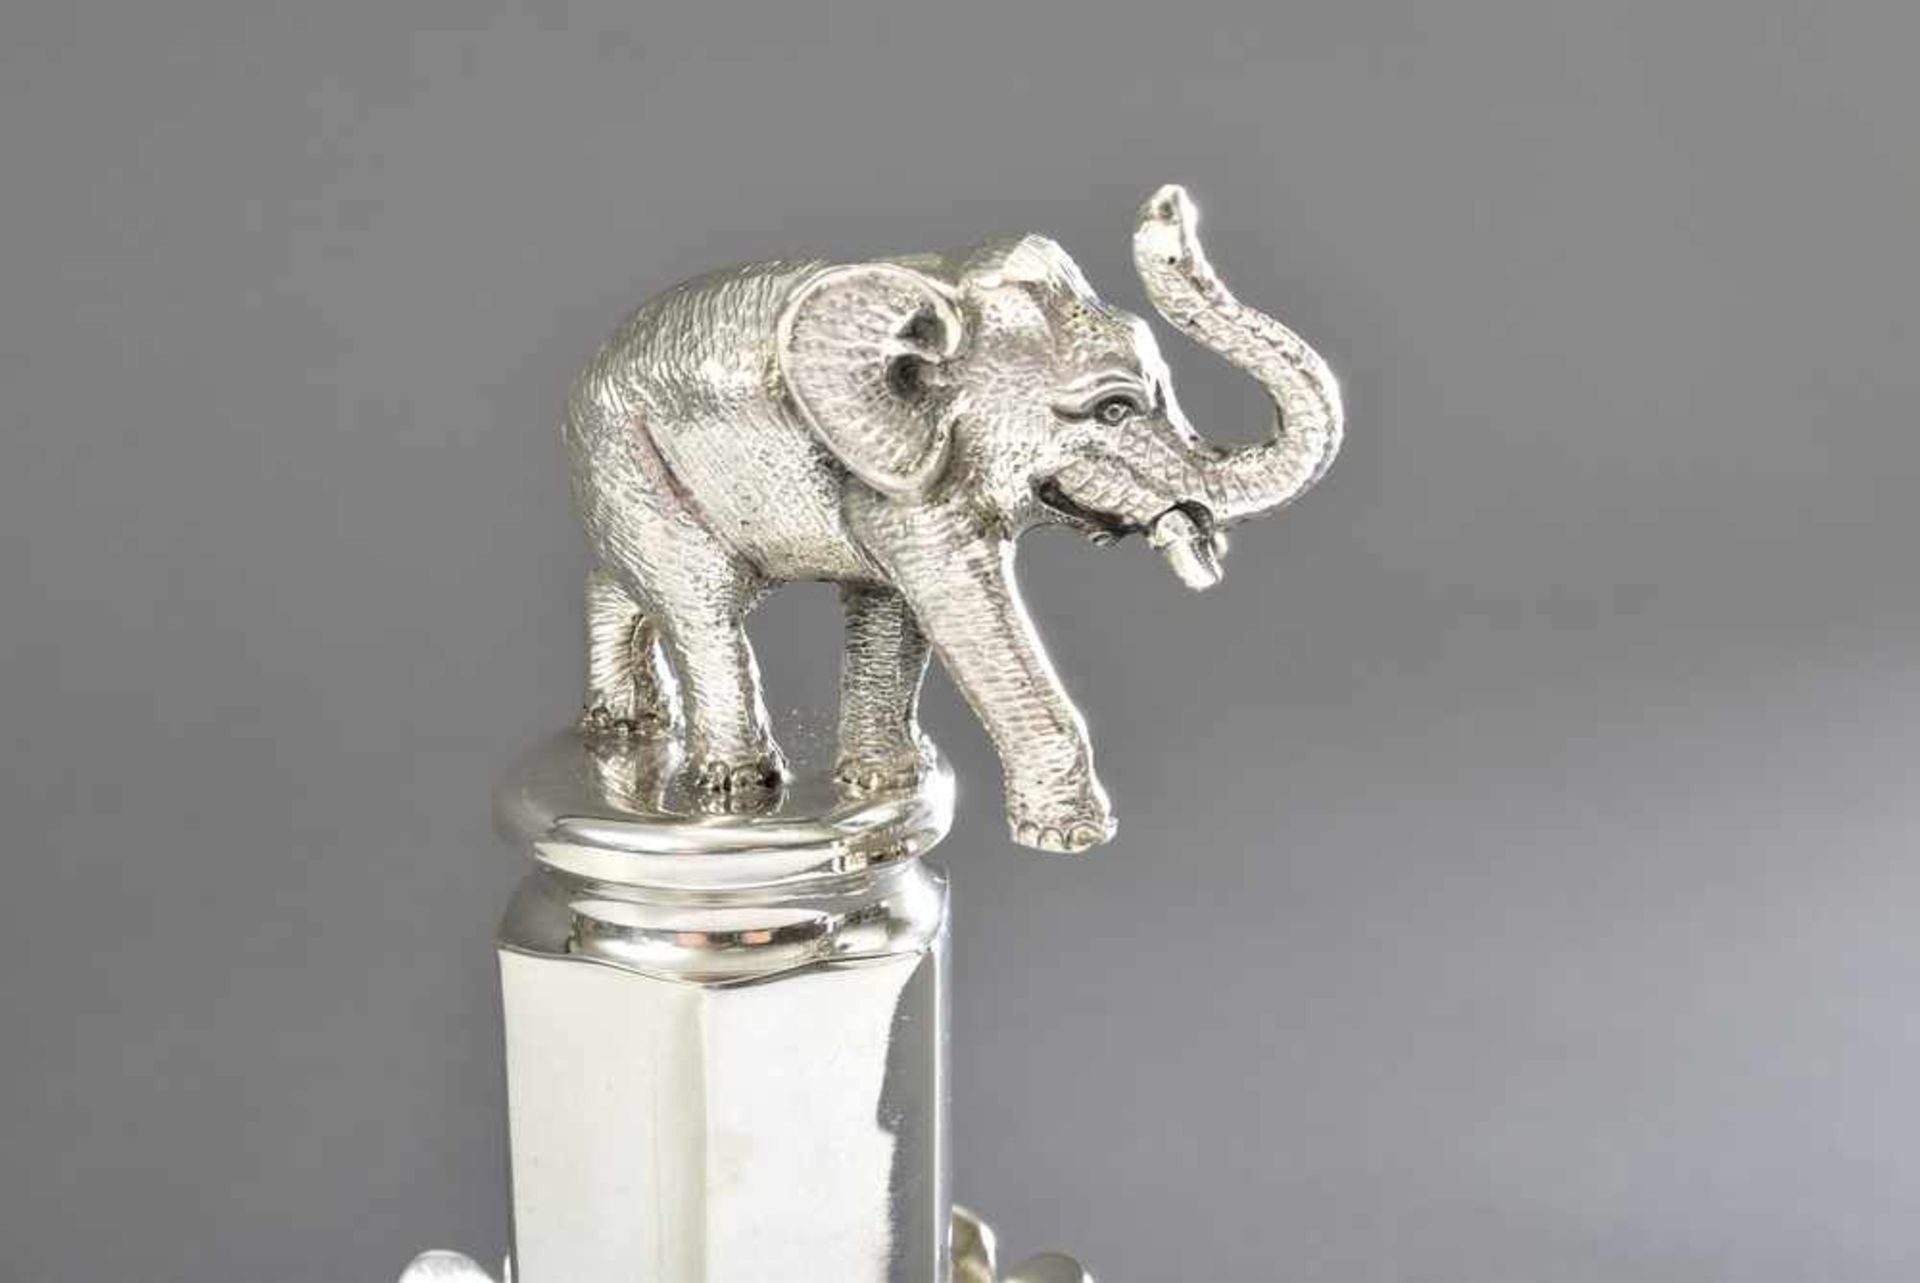 Paliteiro "Elefant auf Säule", Portugal, Silber 835, 229g, H. 15cm - Image 2 of 2